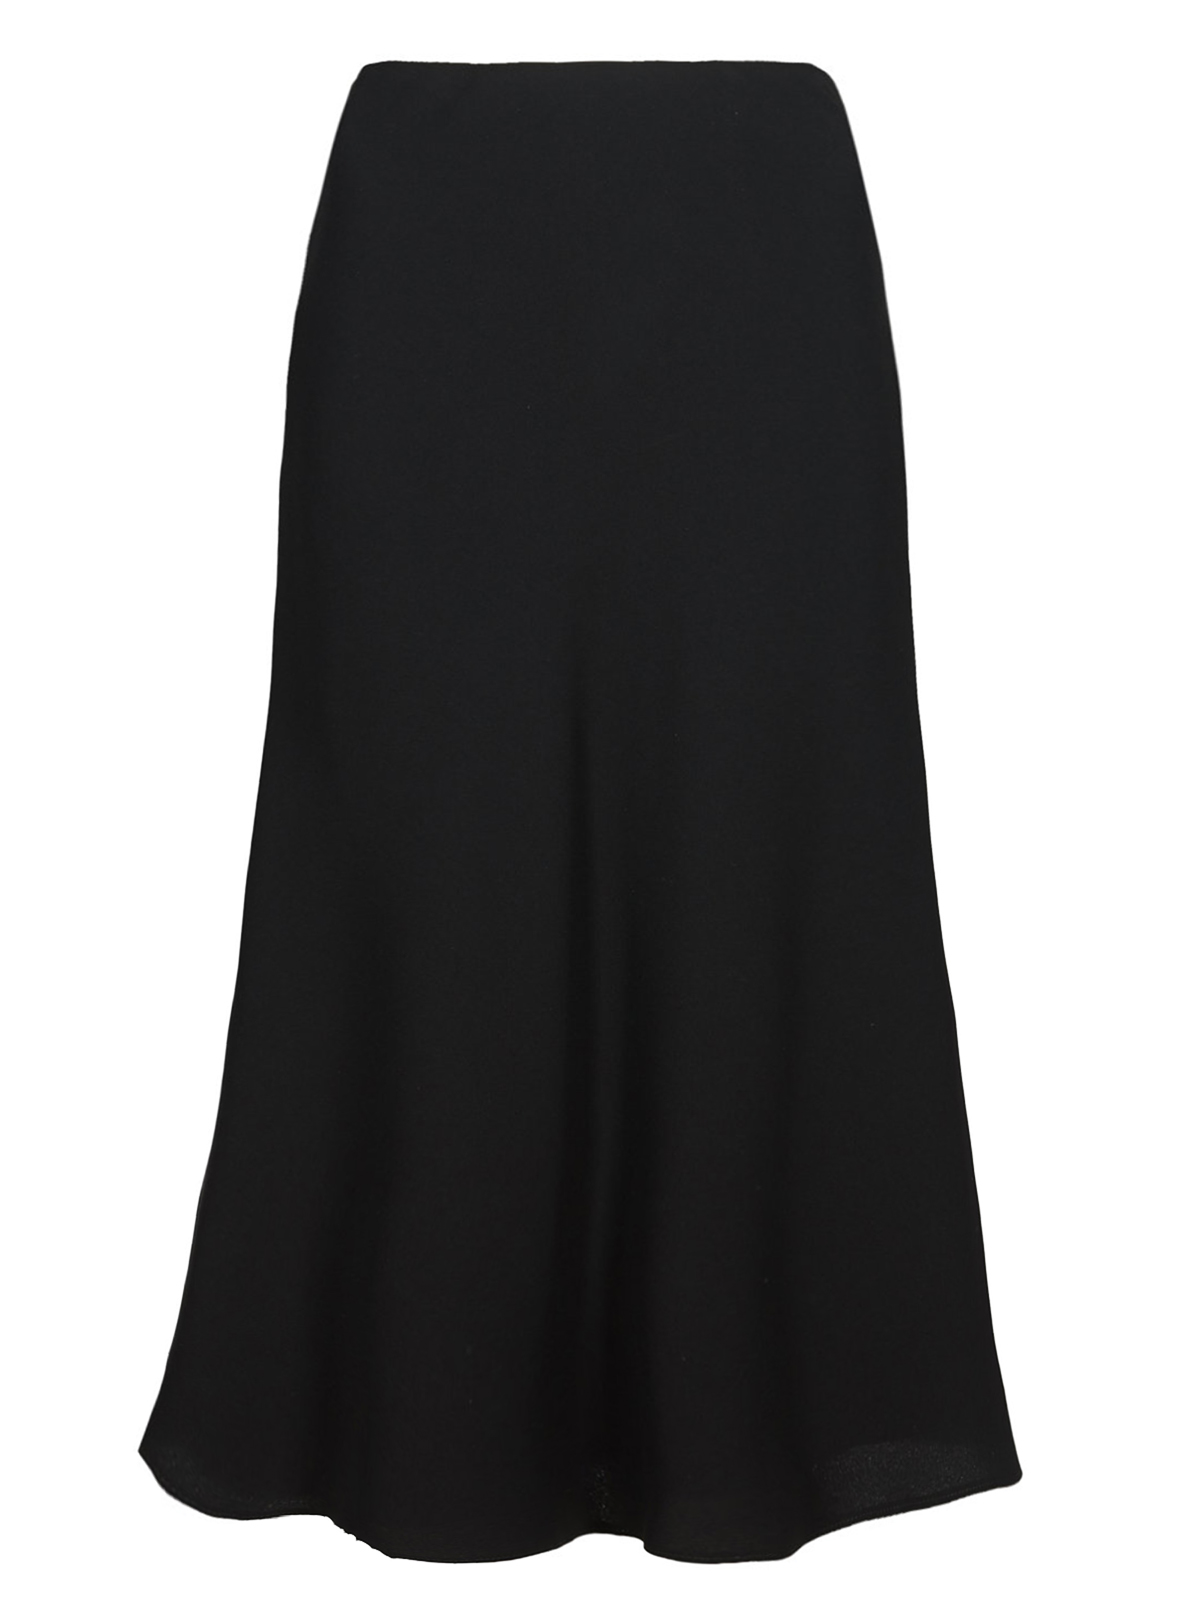 Marks and Spencer - - M&5 BLACK Crêpe Long A-line Skirt - Size 10